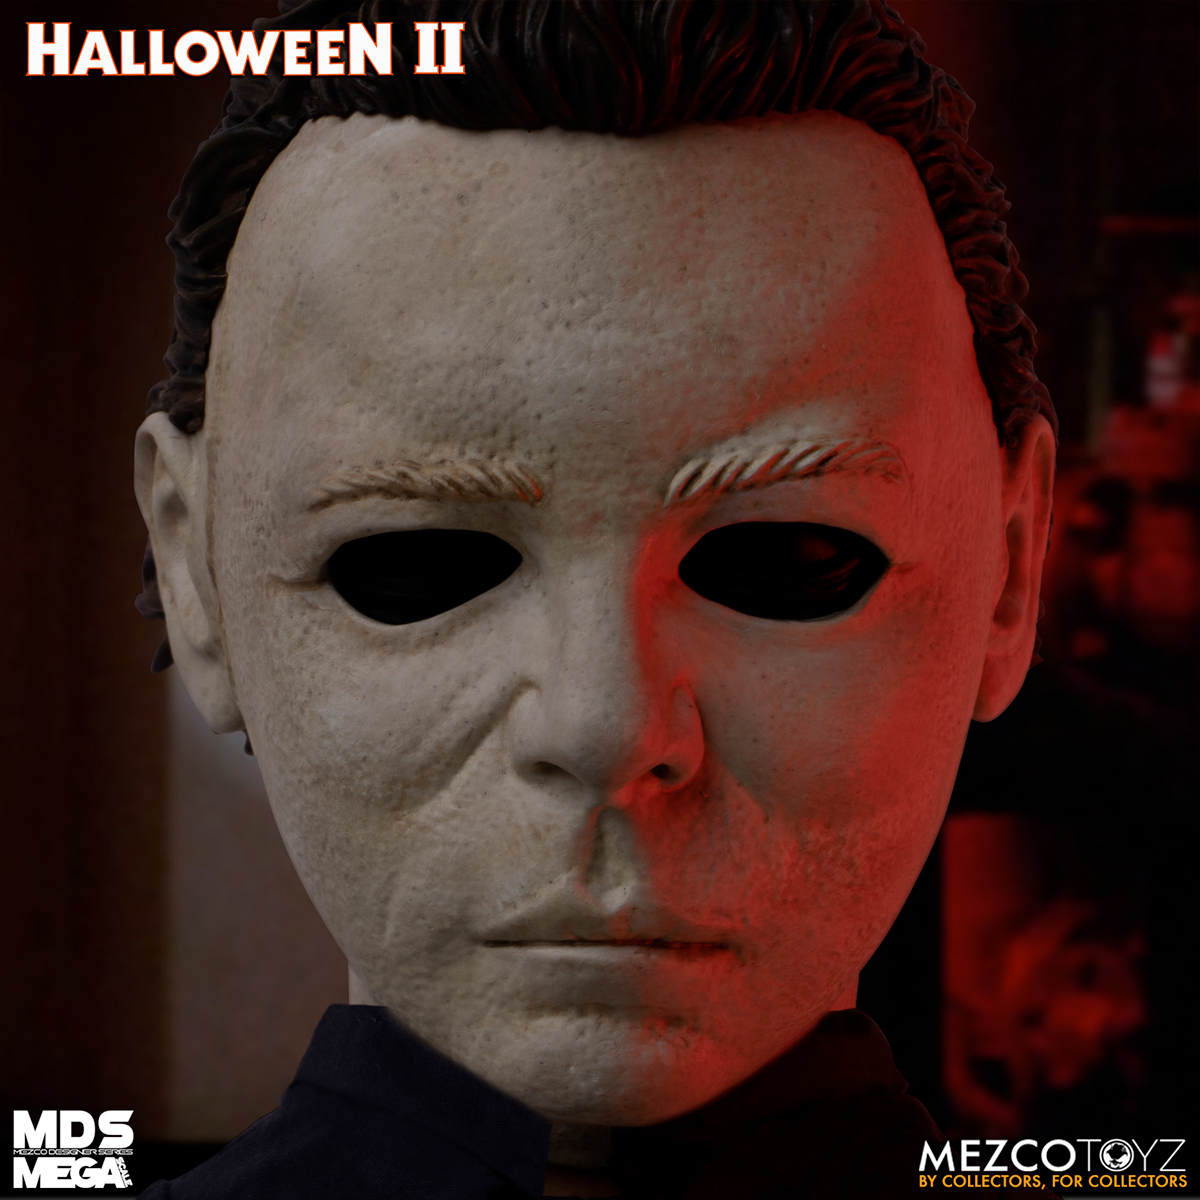 Boneco Halloween II Michael Myers with Sound MDS Mega Scale Doll